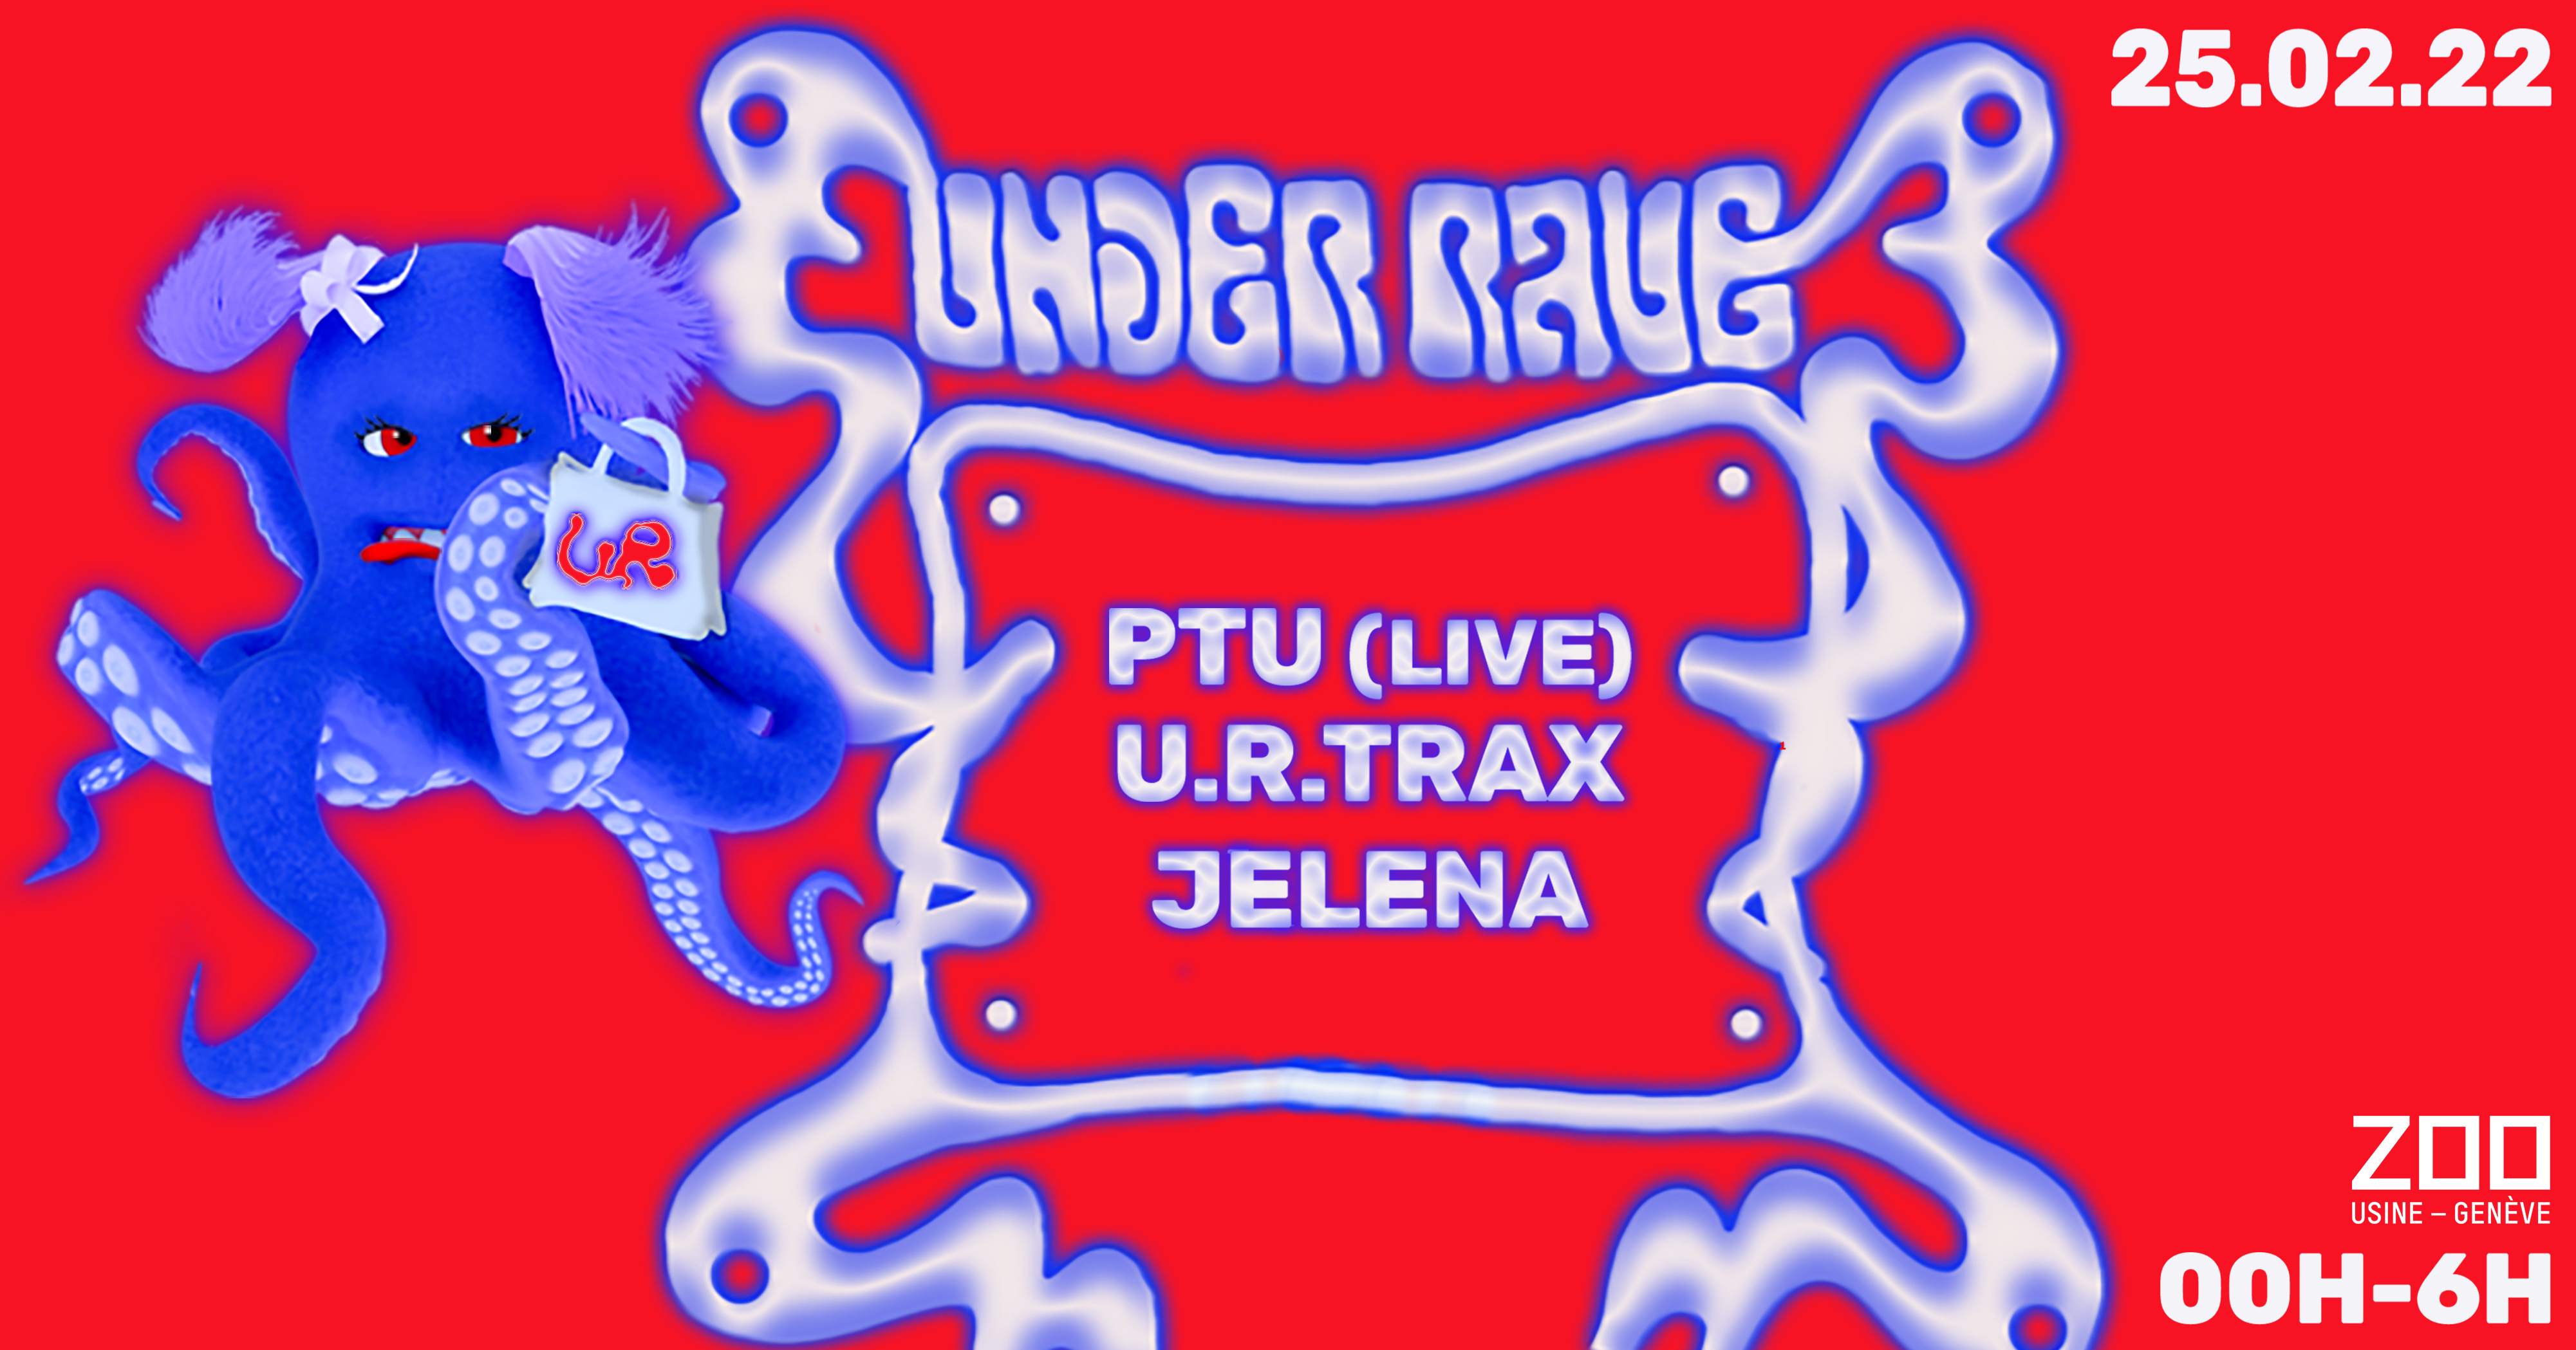 UNDER RAVE with u.r.trax, PTU (live) & Jelena - Página frontal